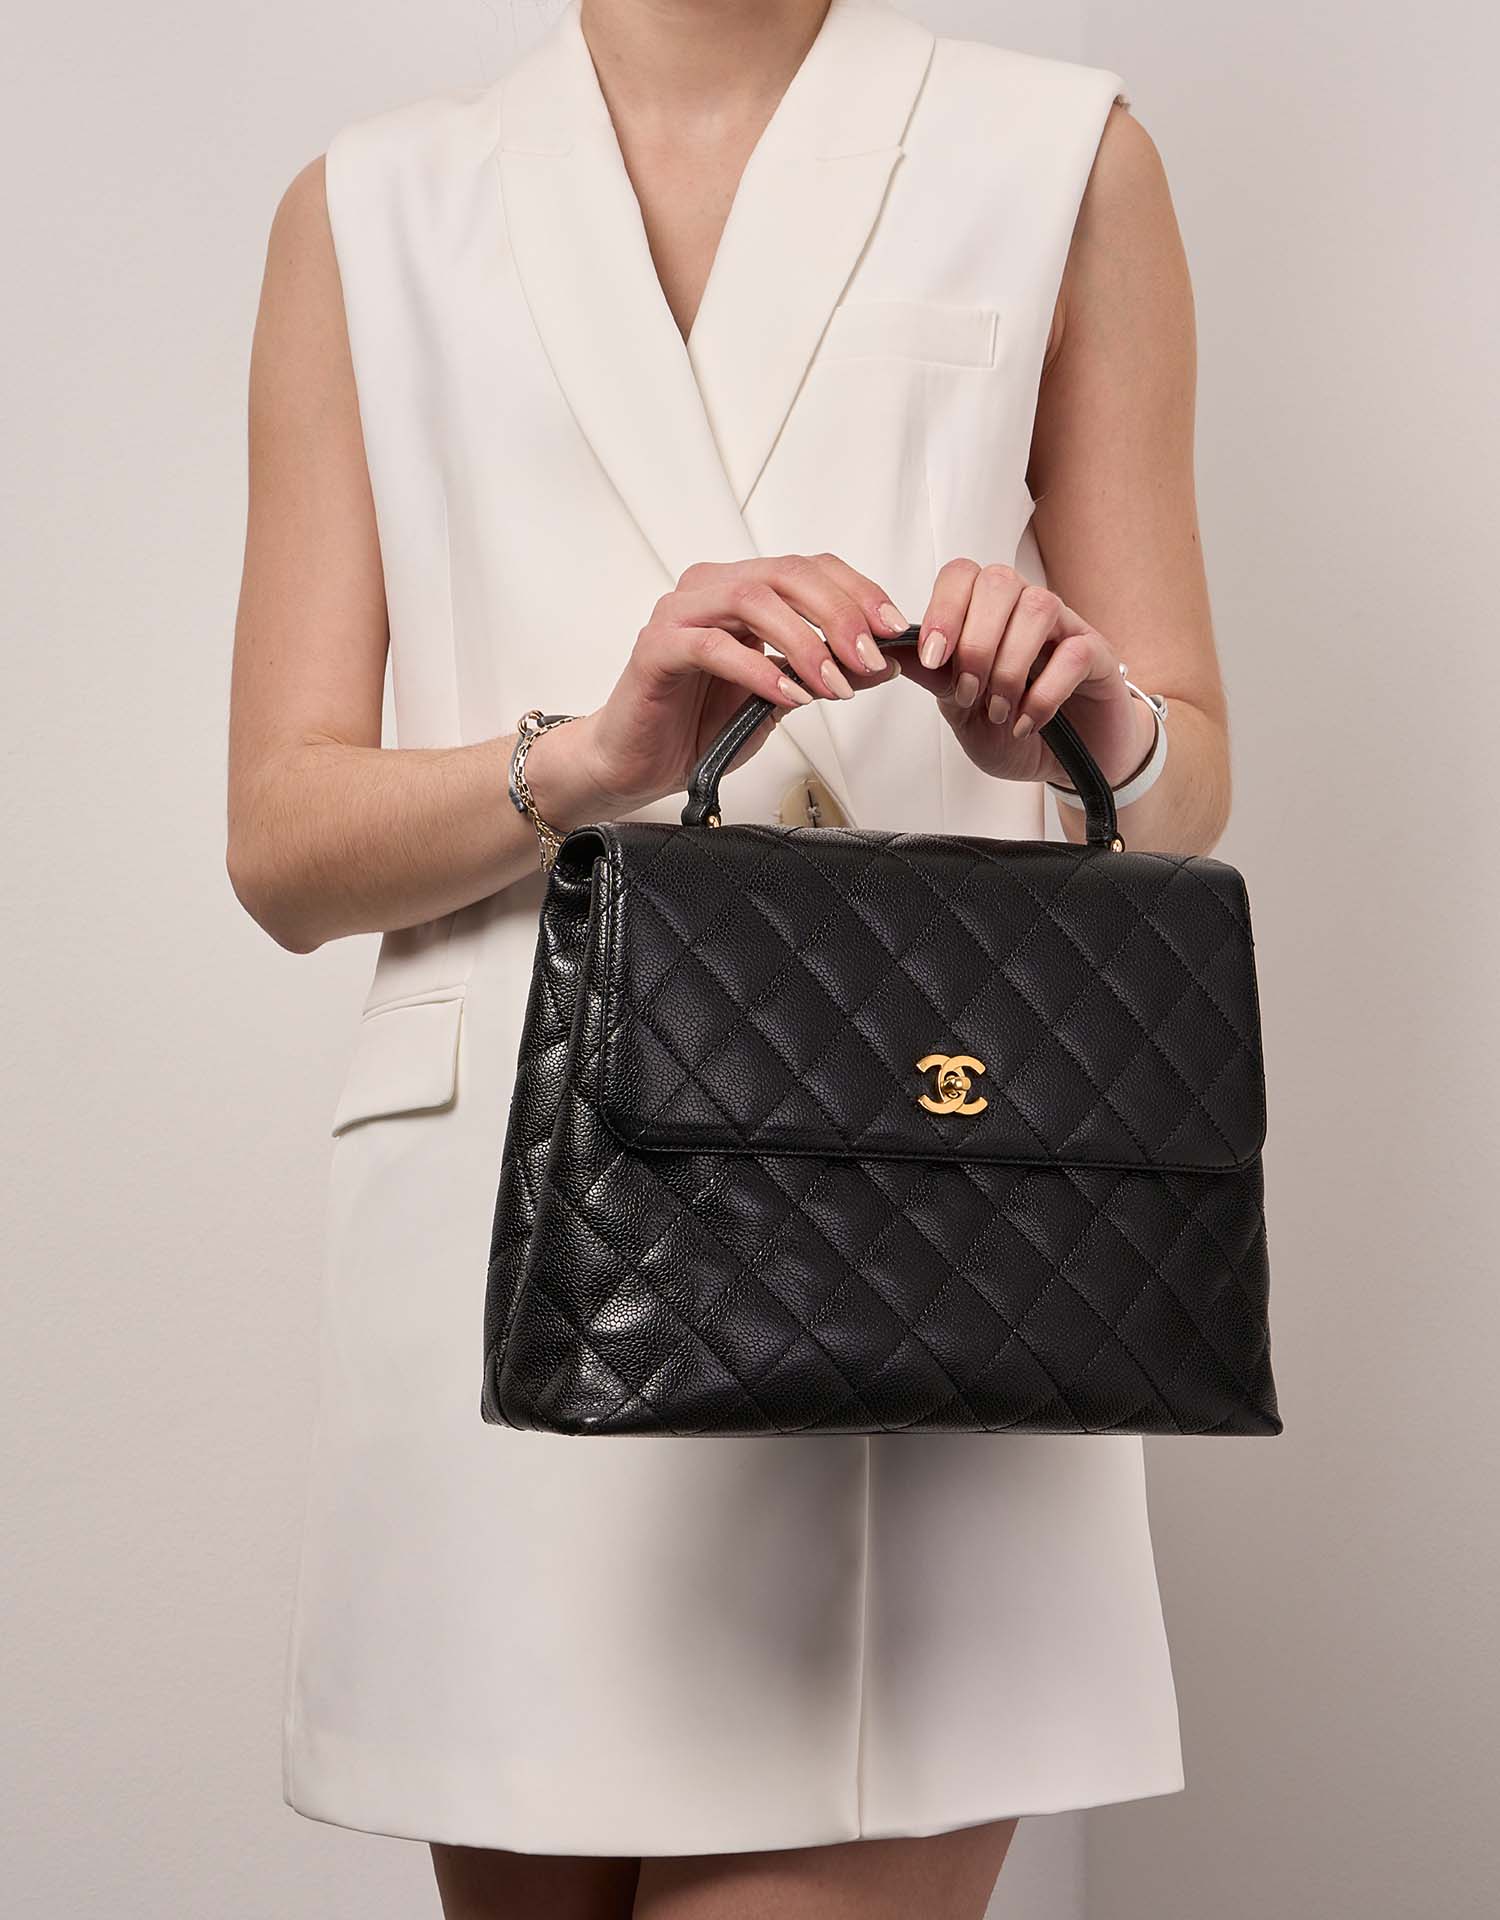 Chanel TimelessHandle Large Black Sizes Worn | Sell your designer bag on Saclab.com